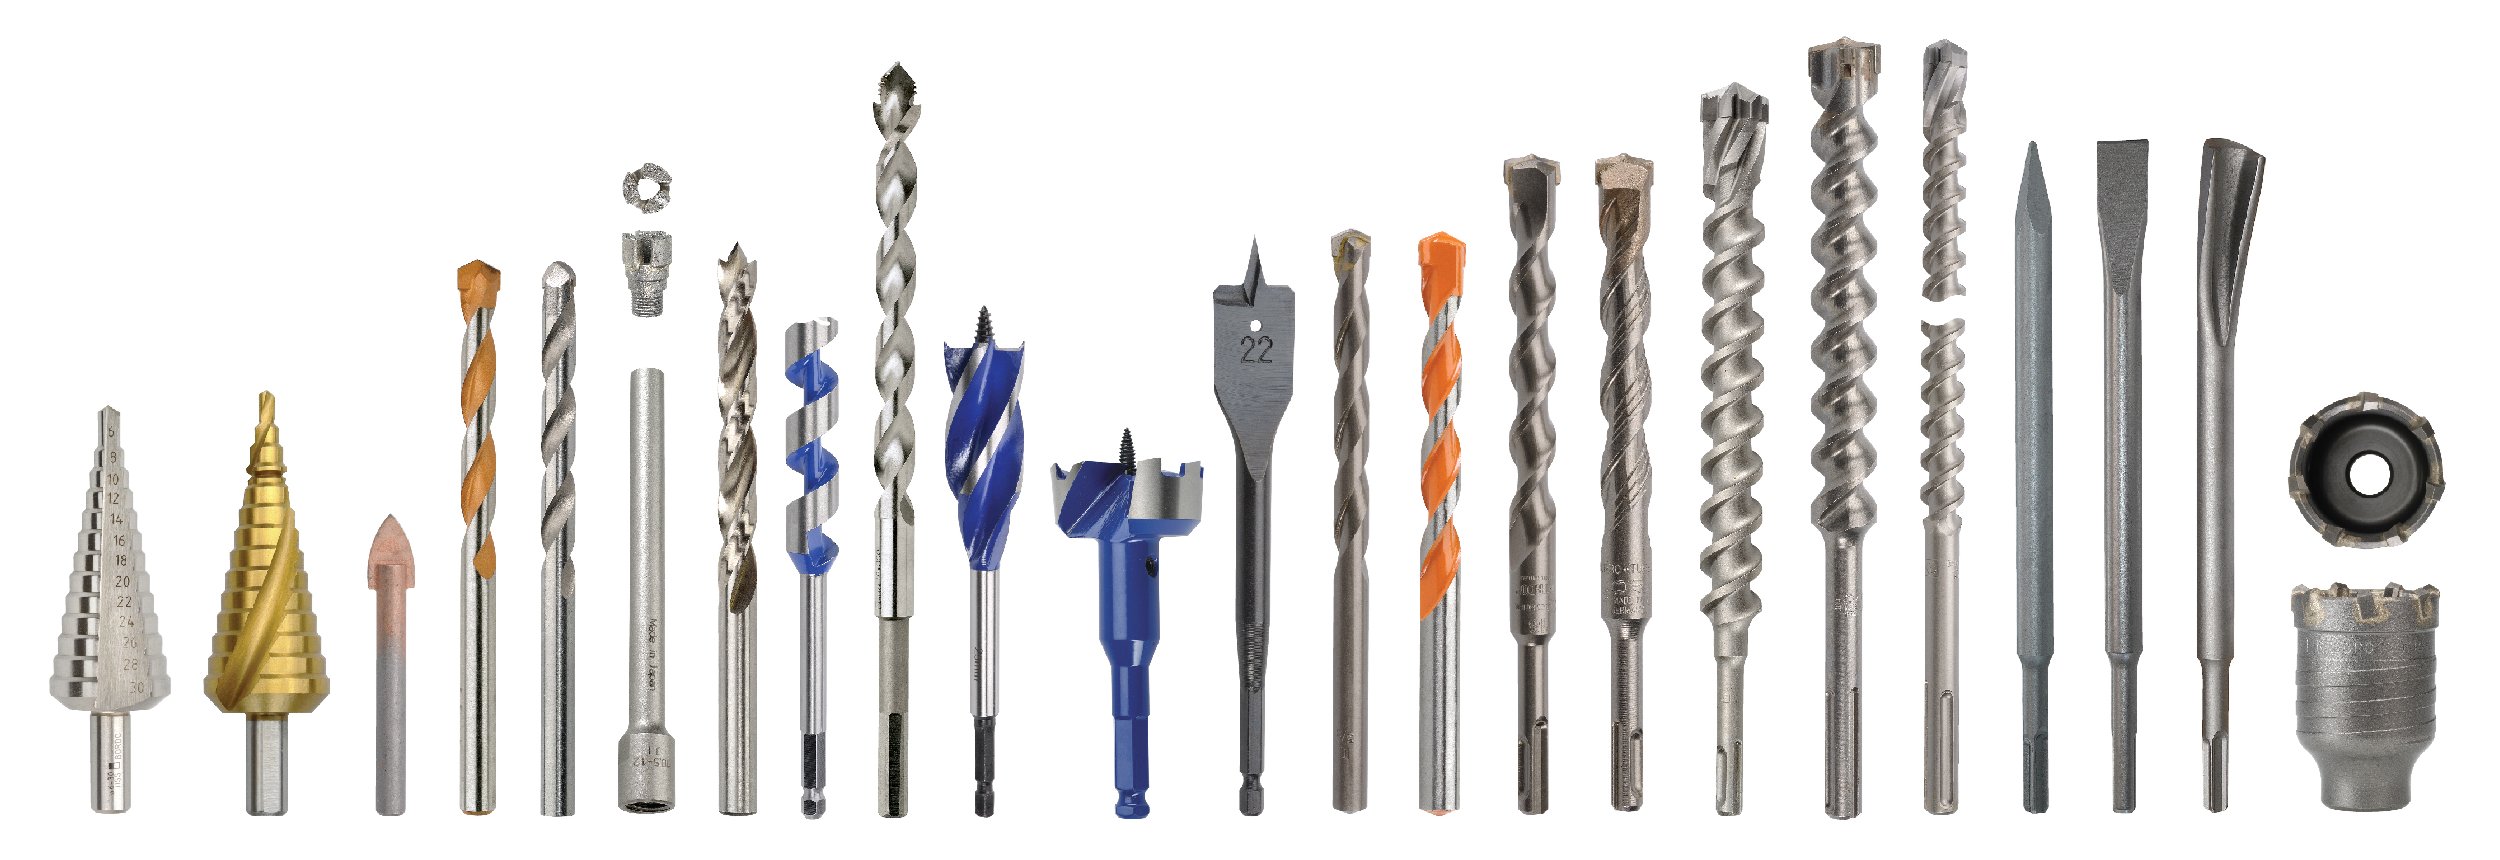 Bordo range of cutting tools